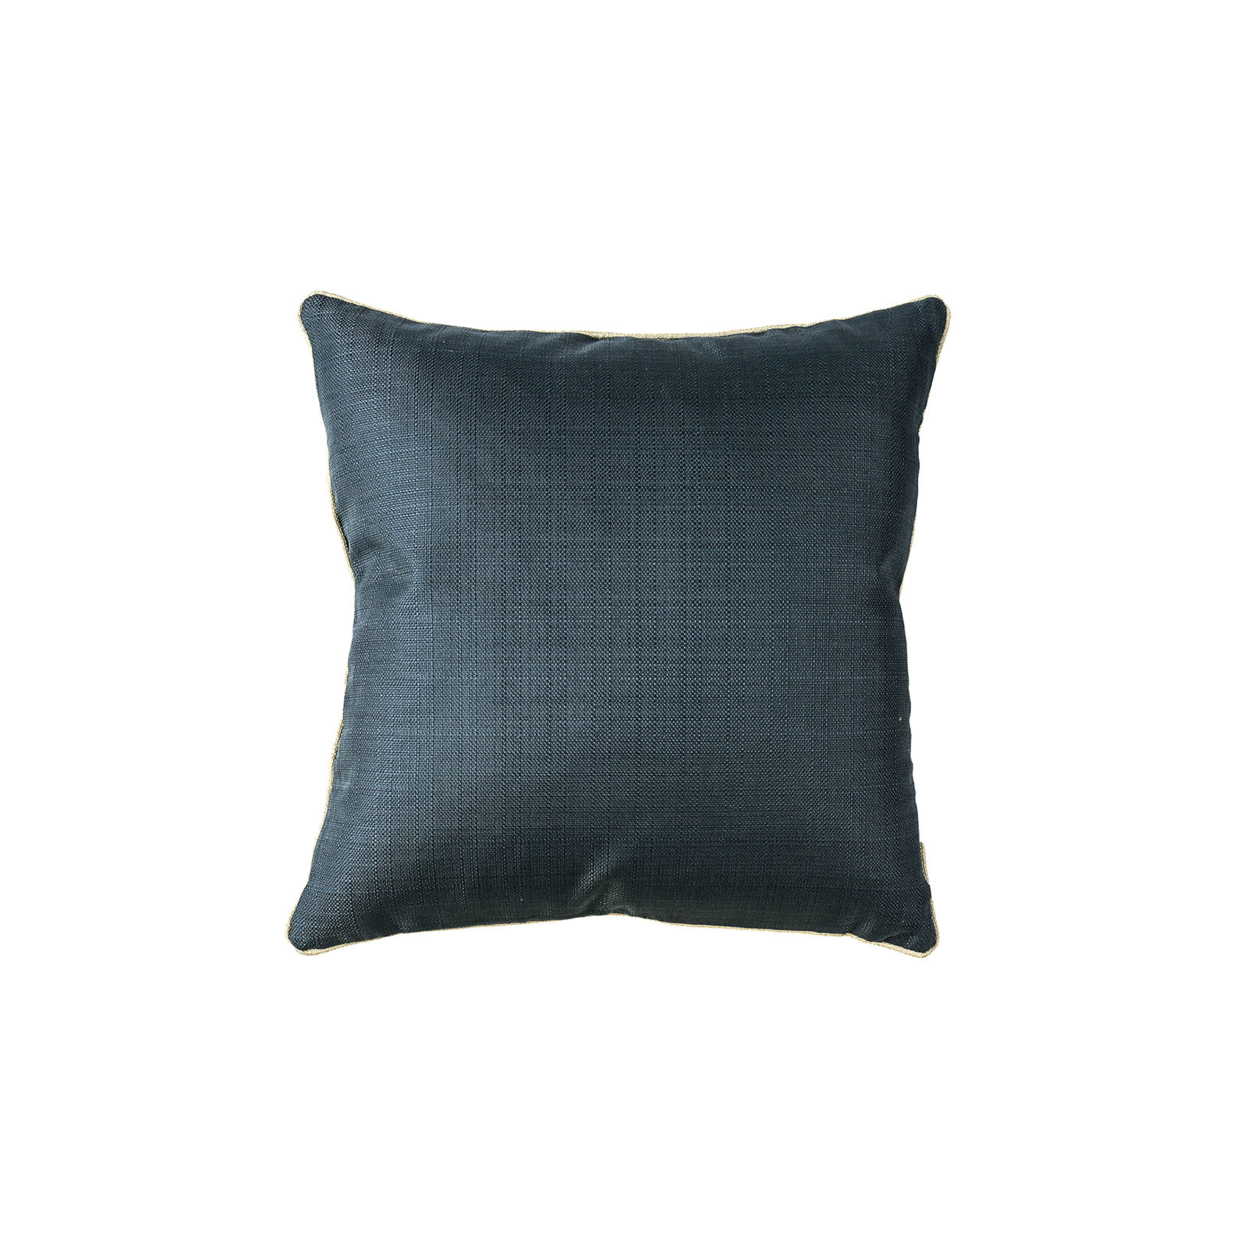 Contemporary Style Set Of 2 Throw Pillows With Plain Face, Navy Blue- Saltoro Sherpi